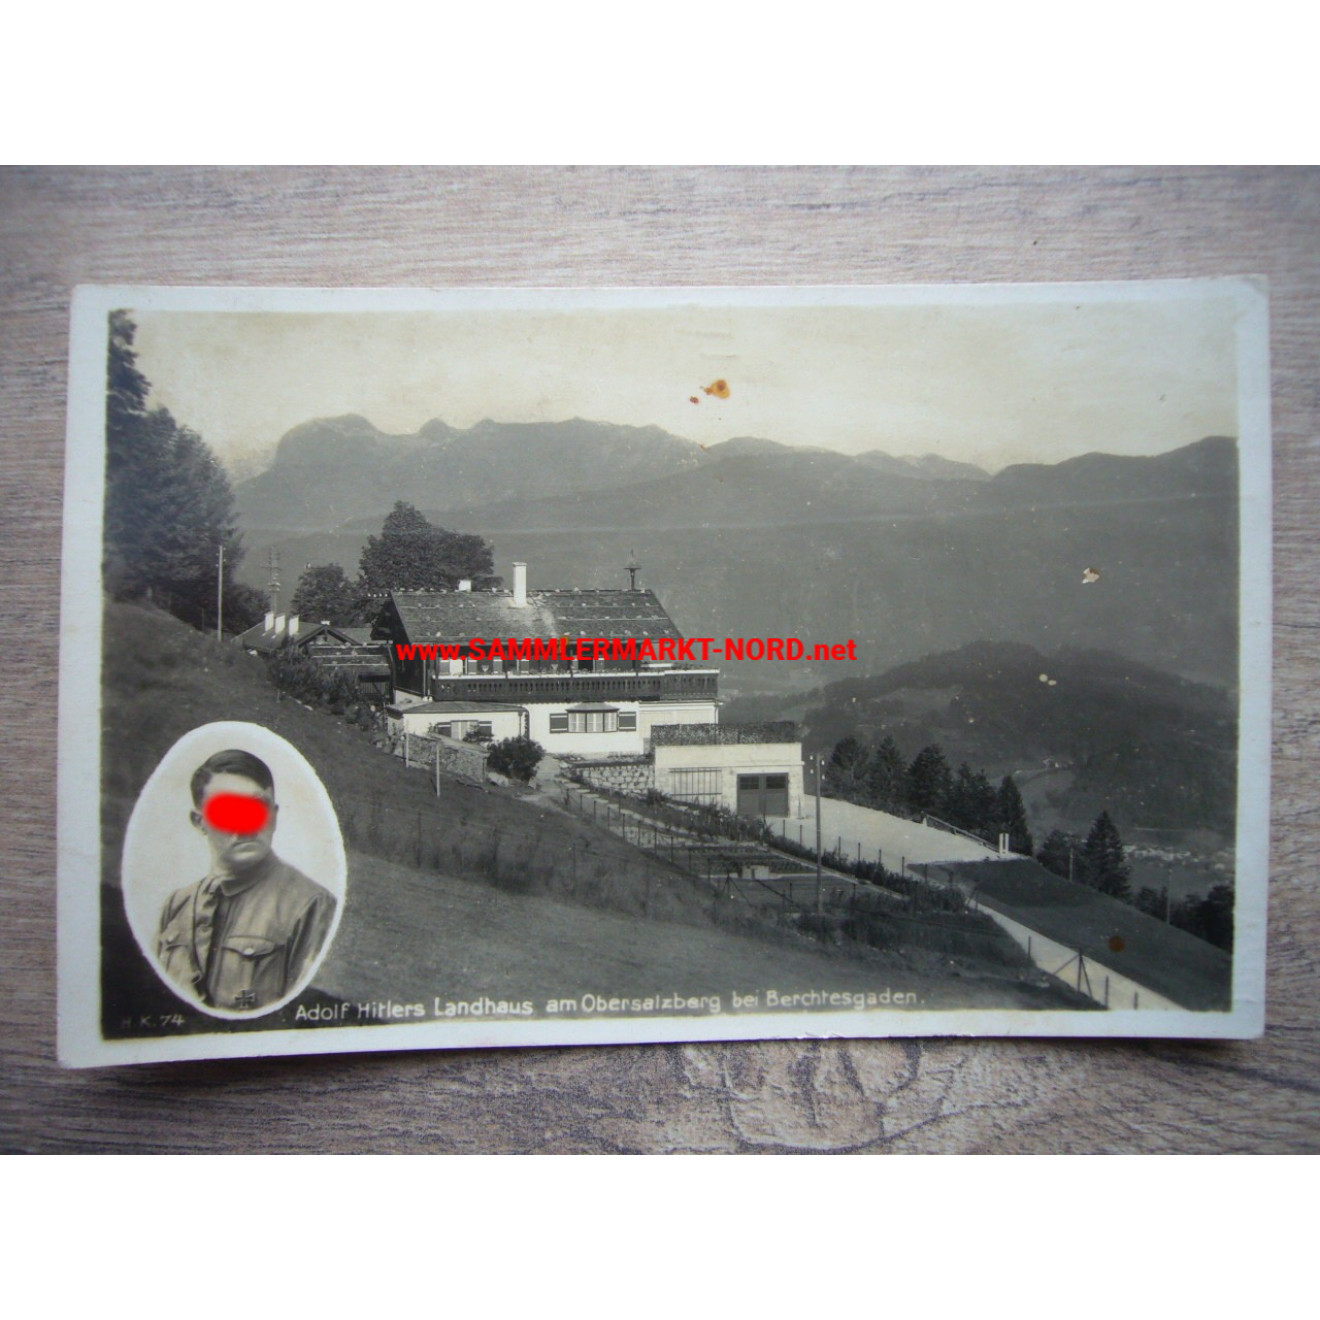 Adolf Hitlers Landhaus am Obersalzberg - Postkarte